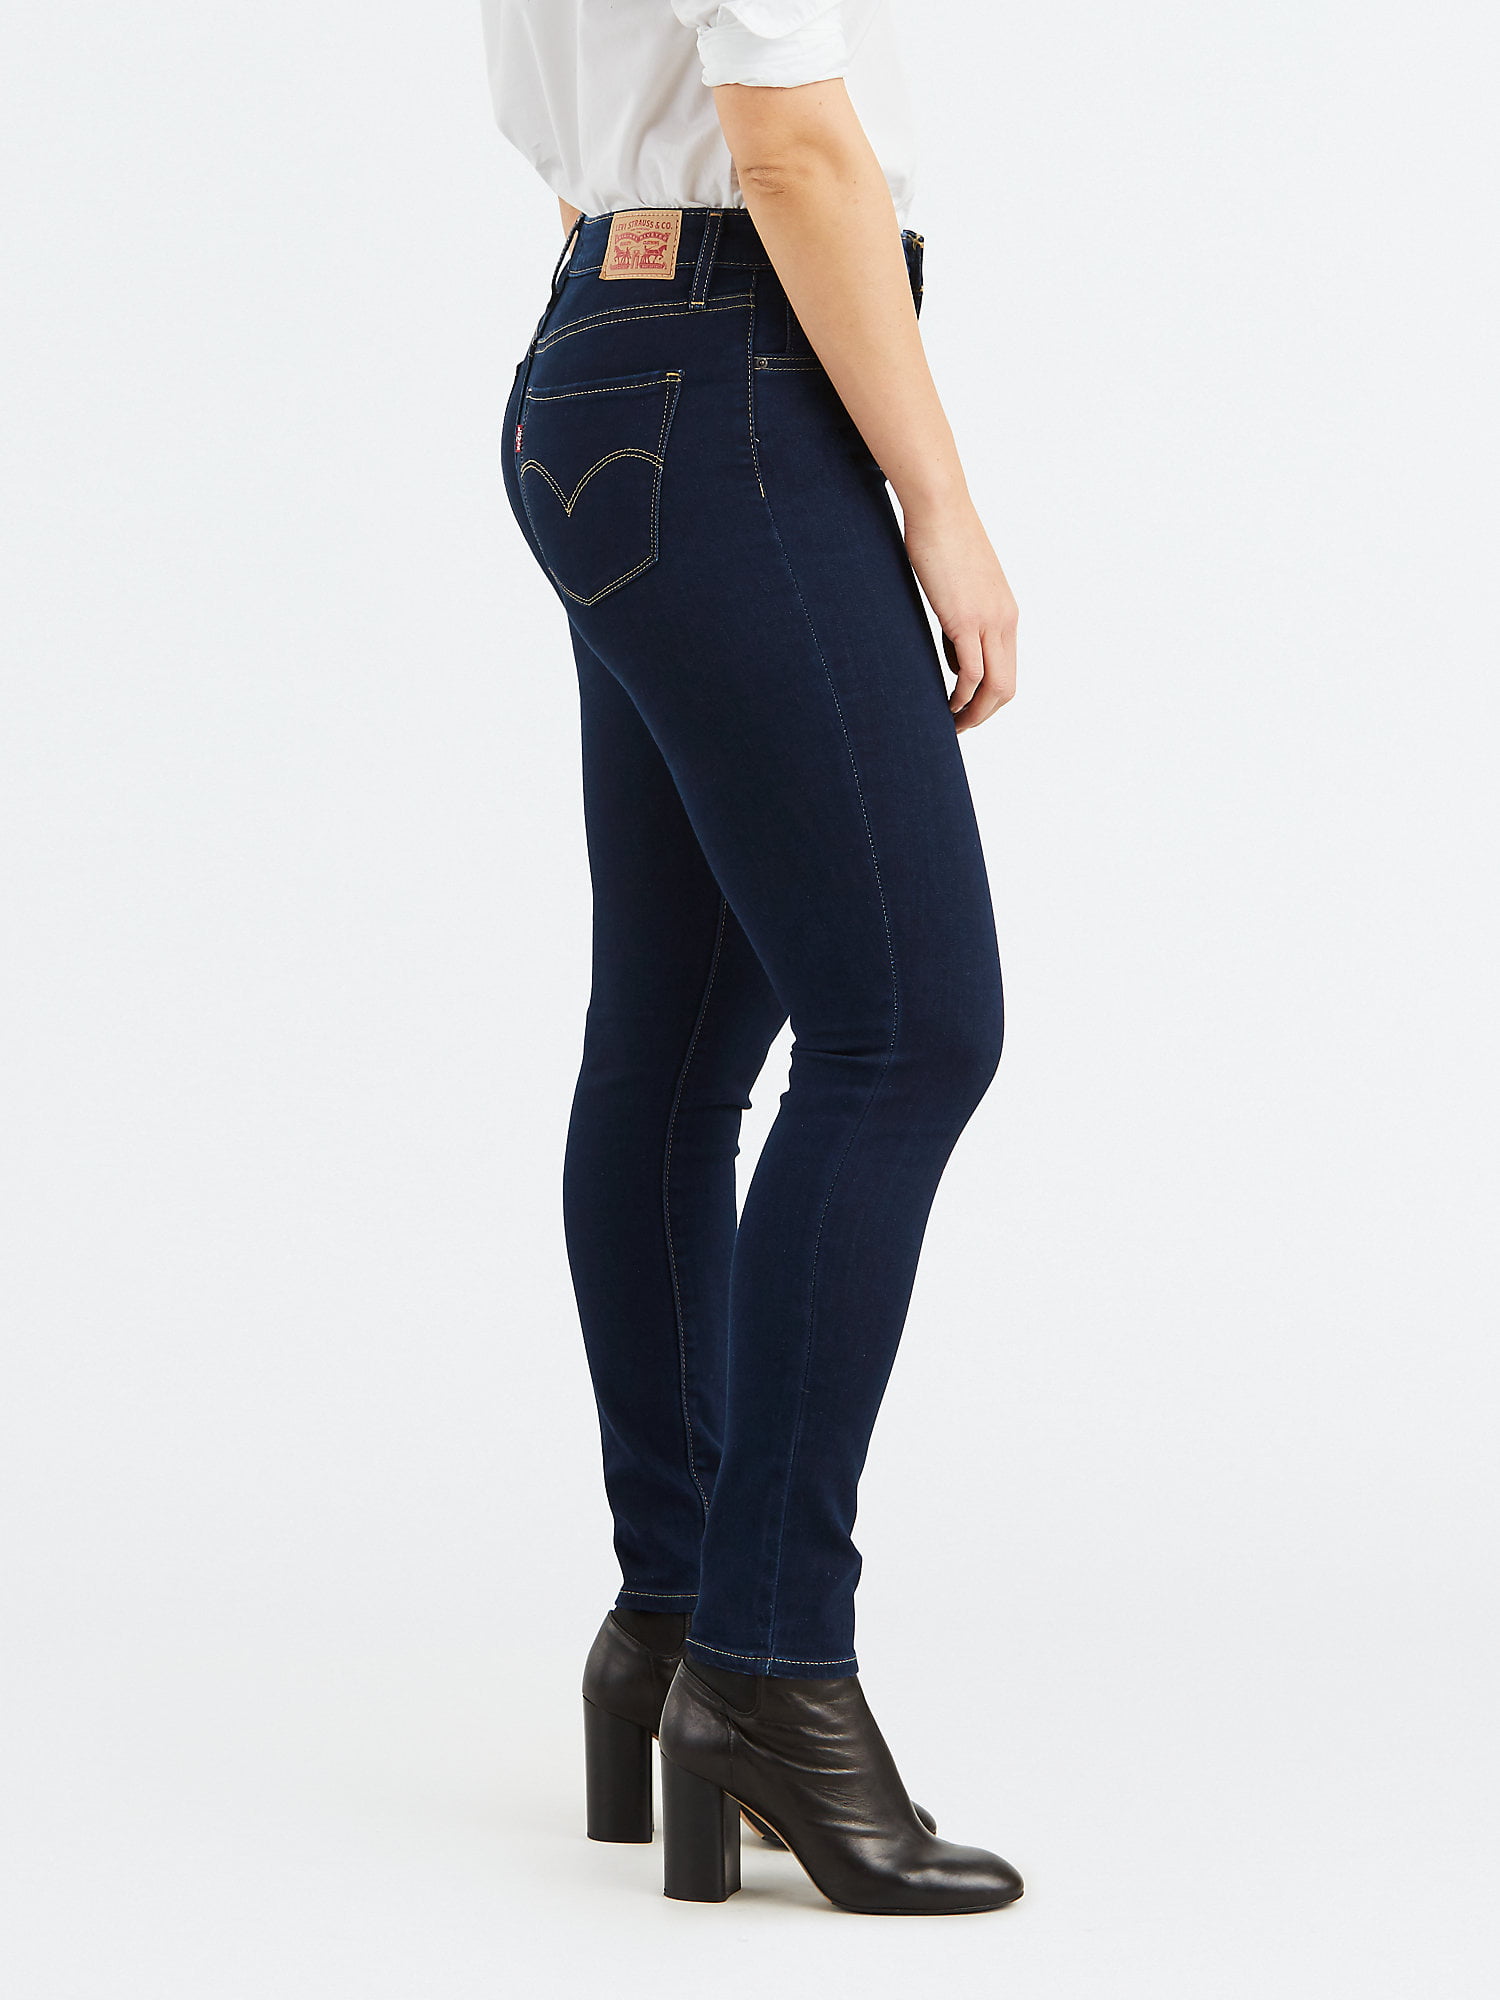 Levi's 721 High Rise Skinny Women's Jeans 34x30 - cast shadows 